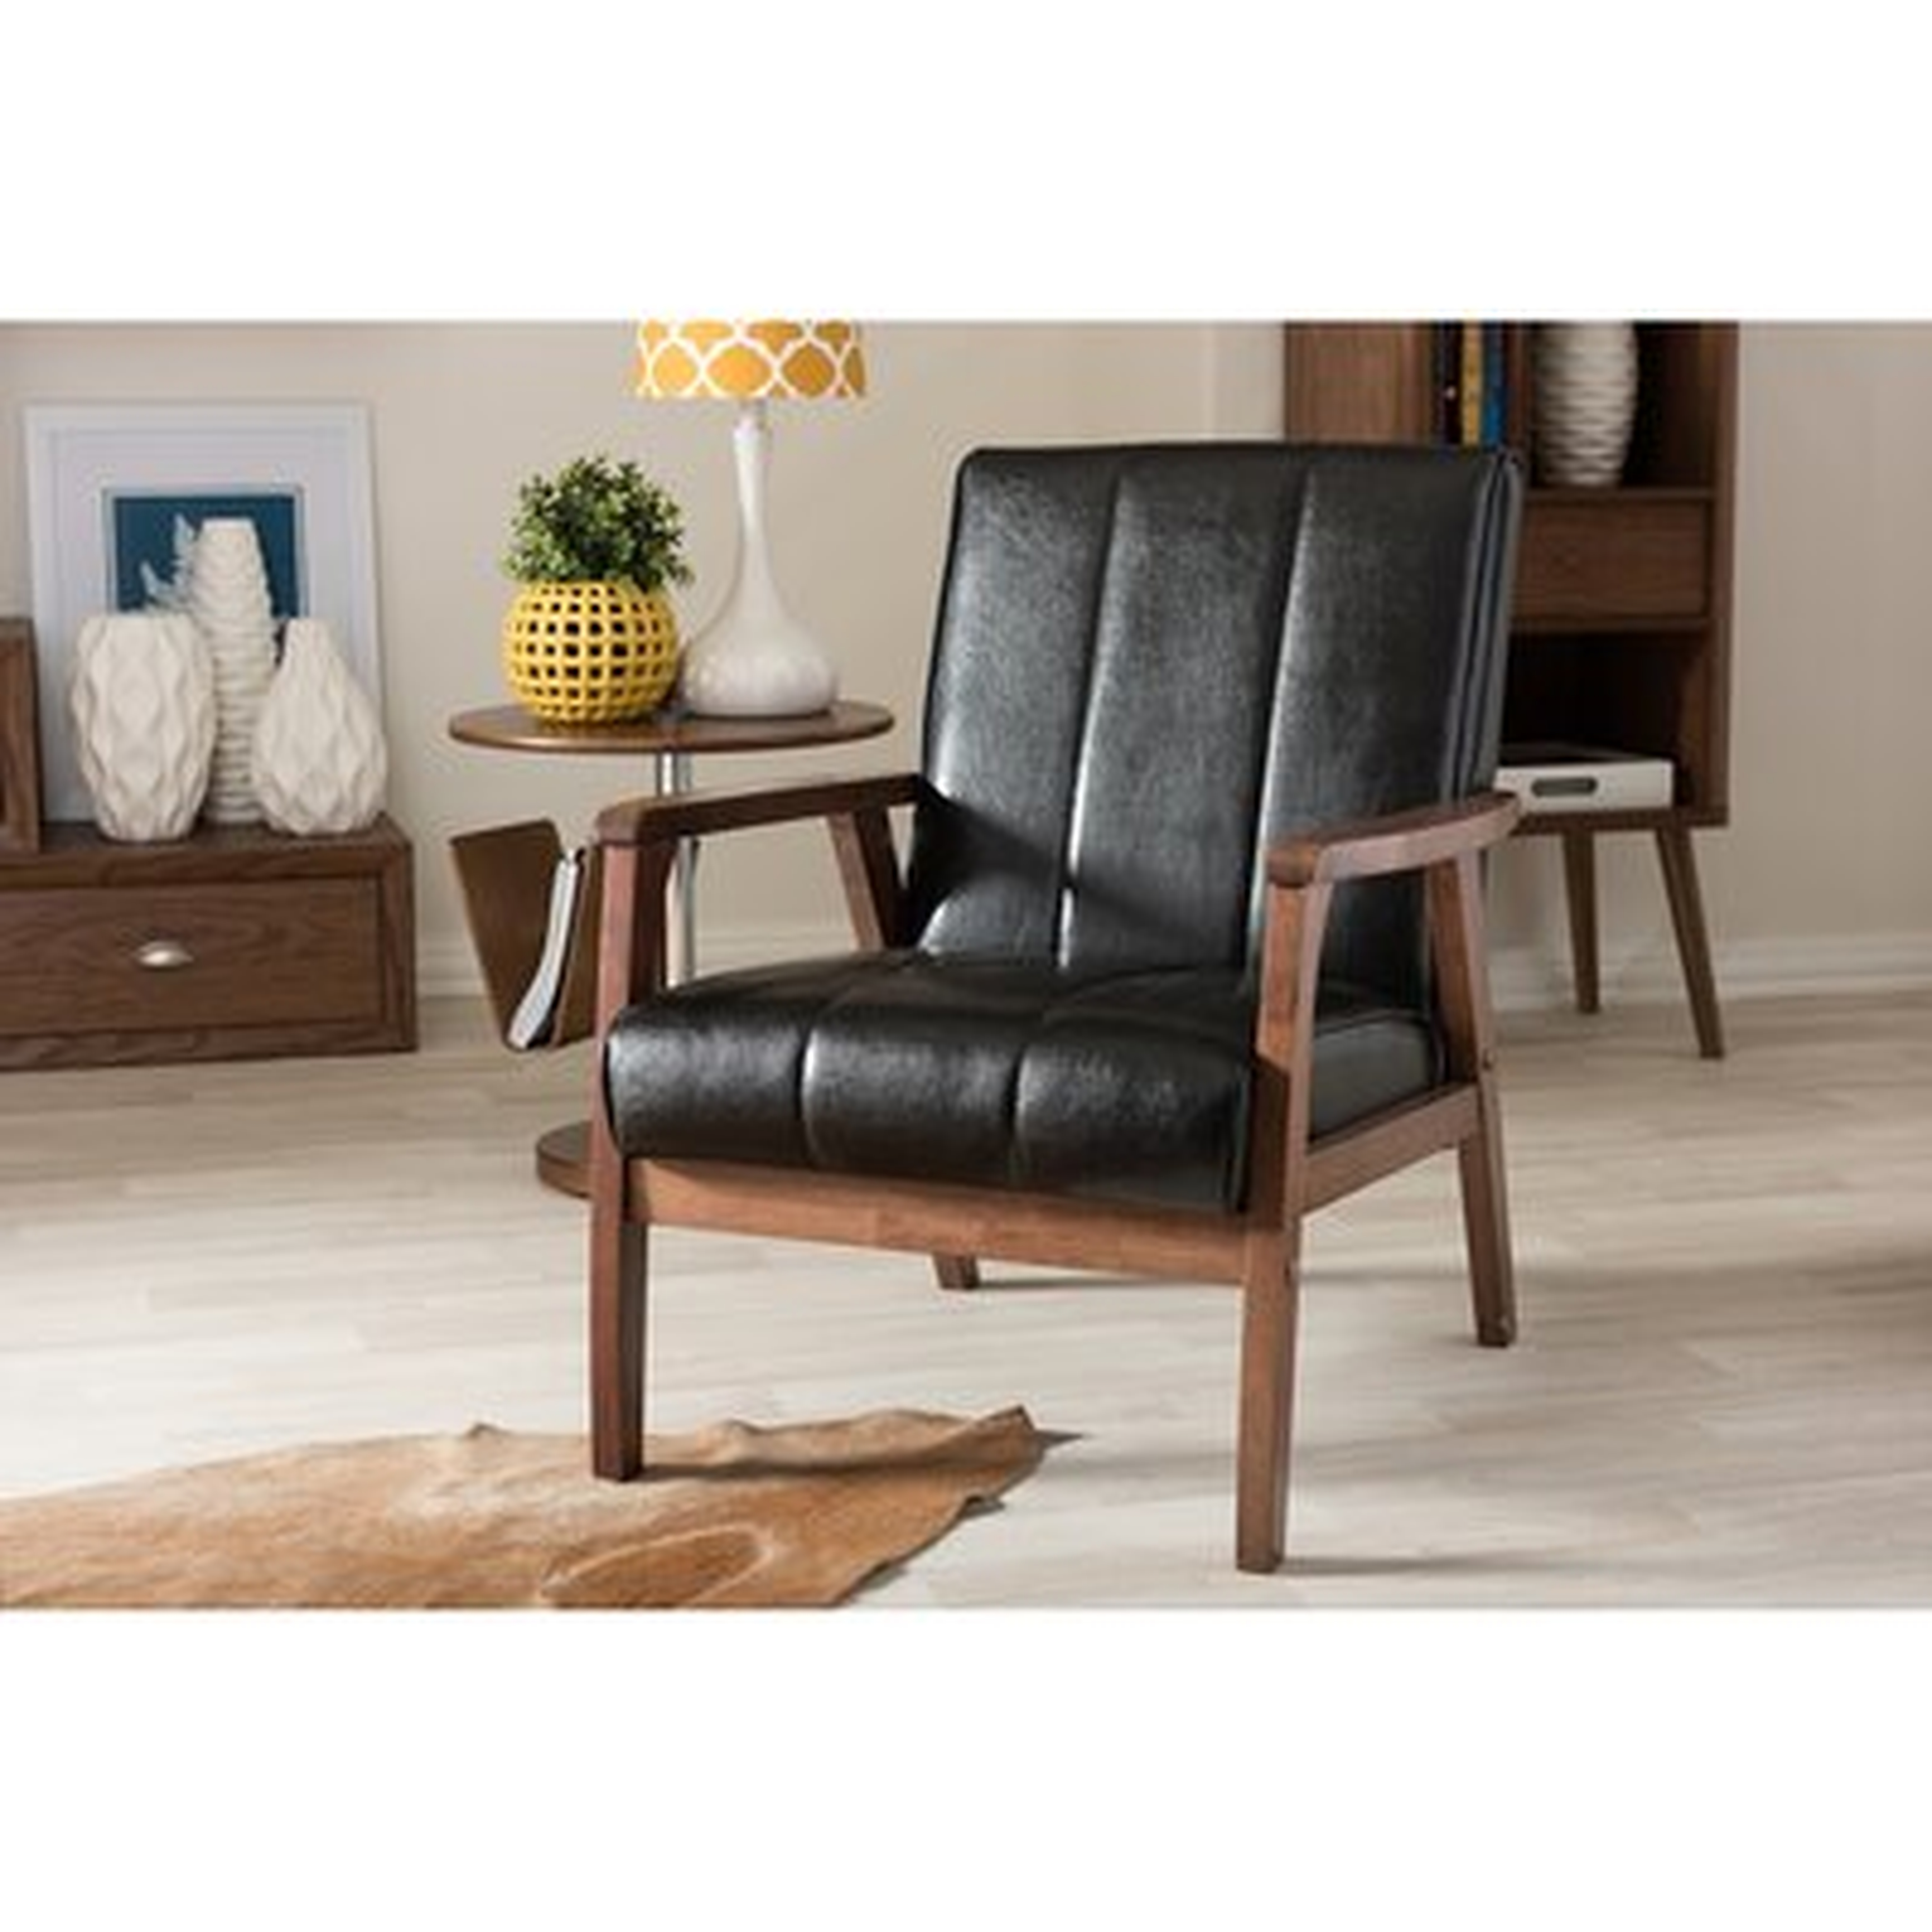 Mid-Century Modern Scandinavian Style Black Faux Leather Wooden Lounge Chair - Wayfair